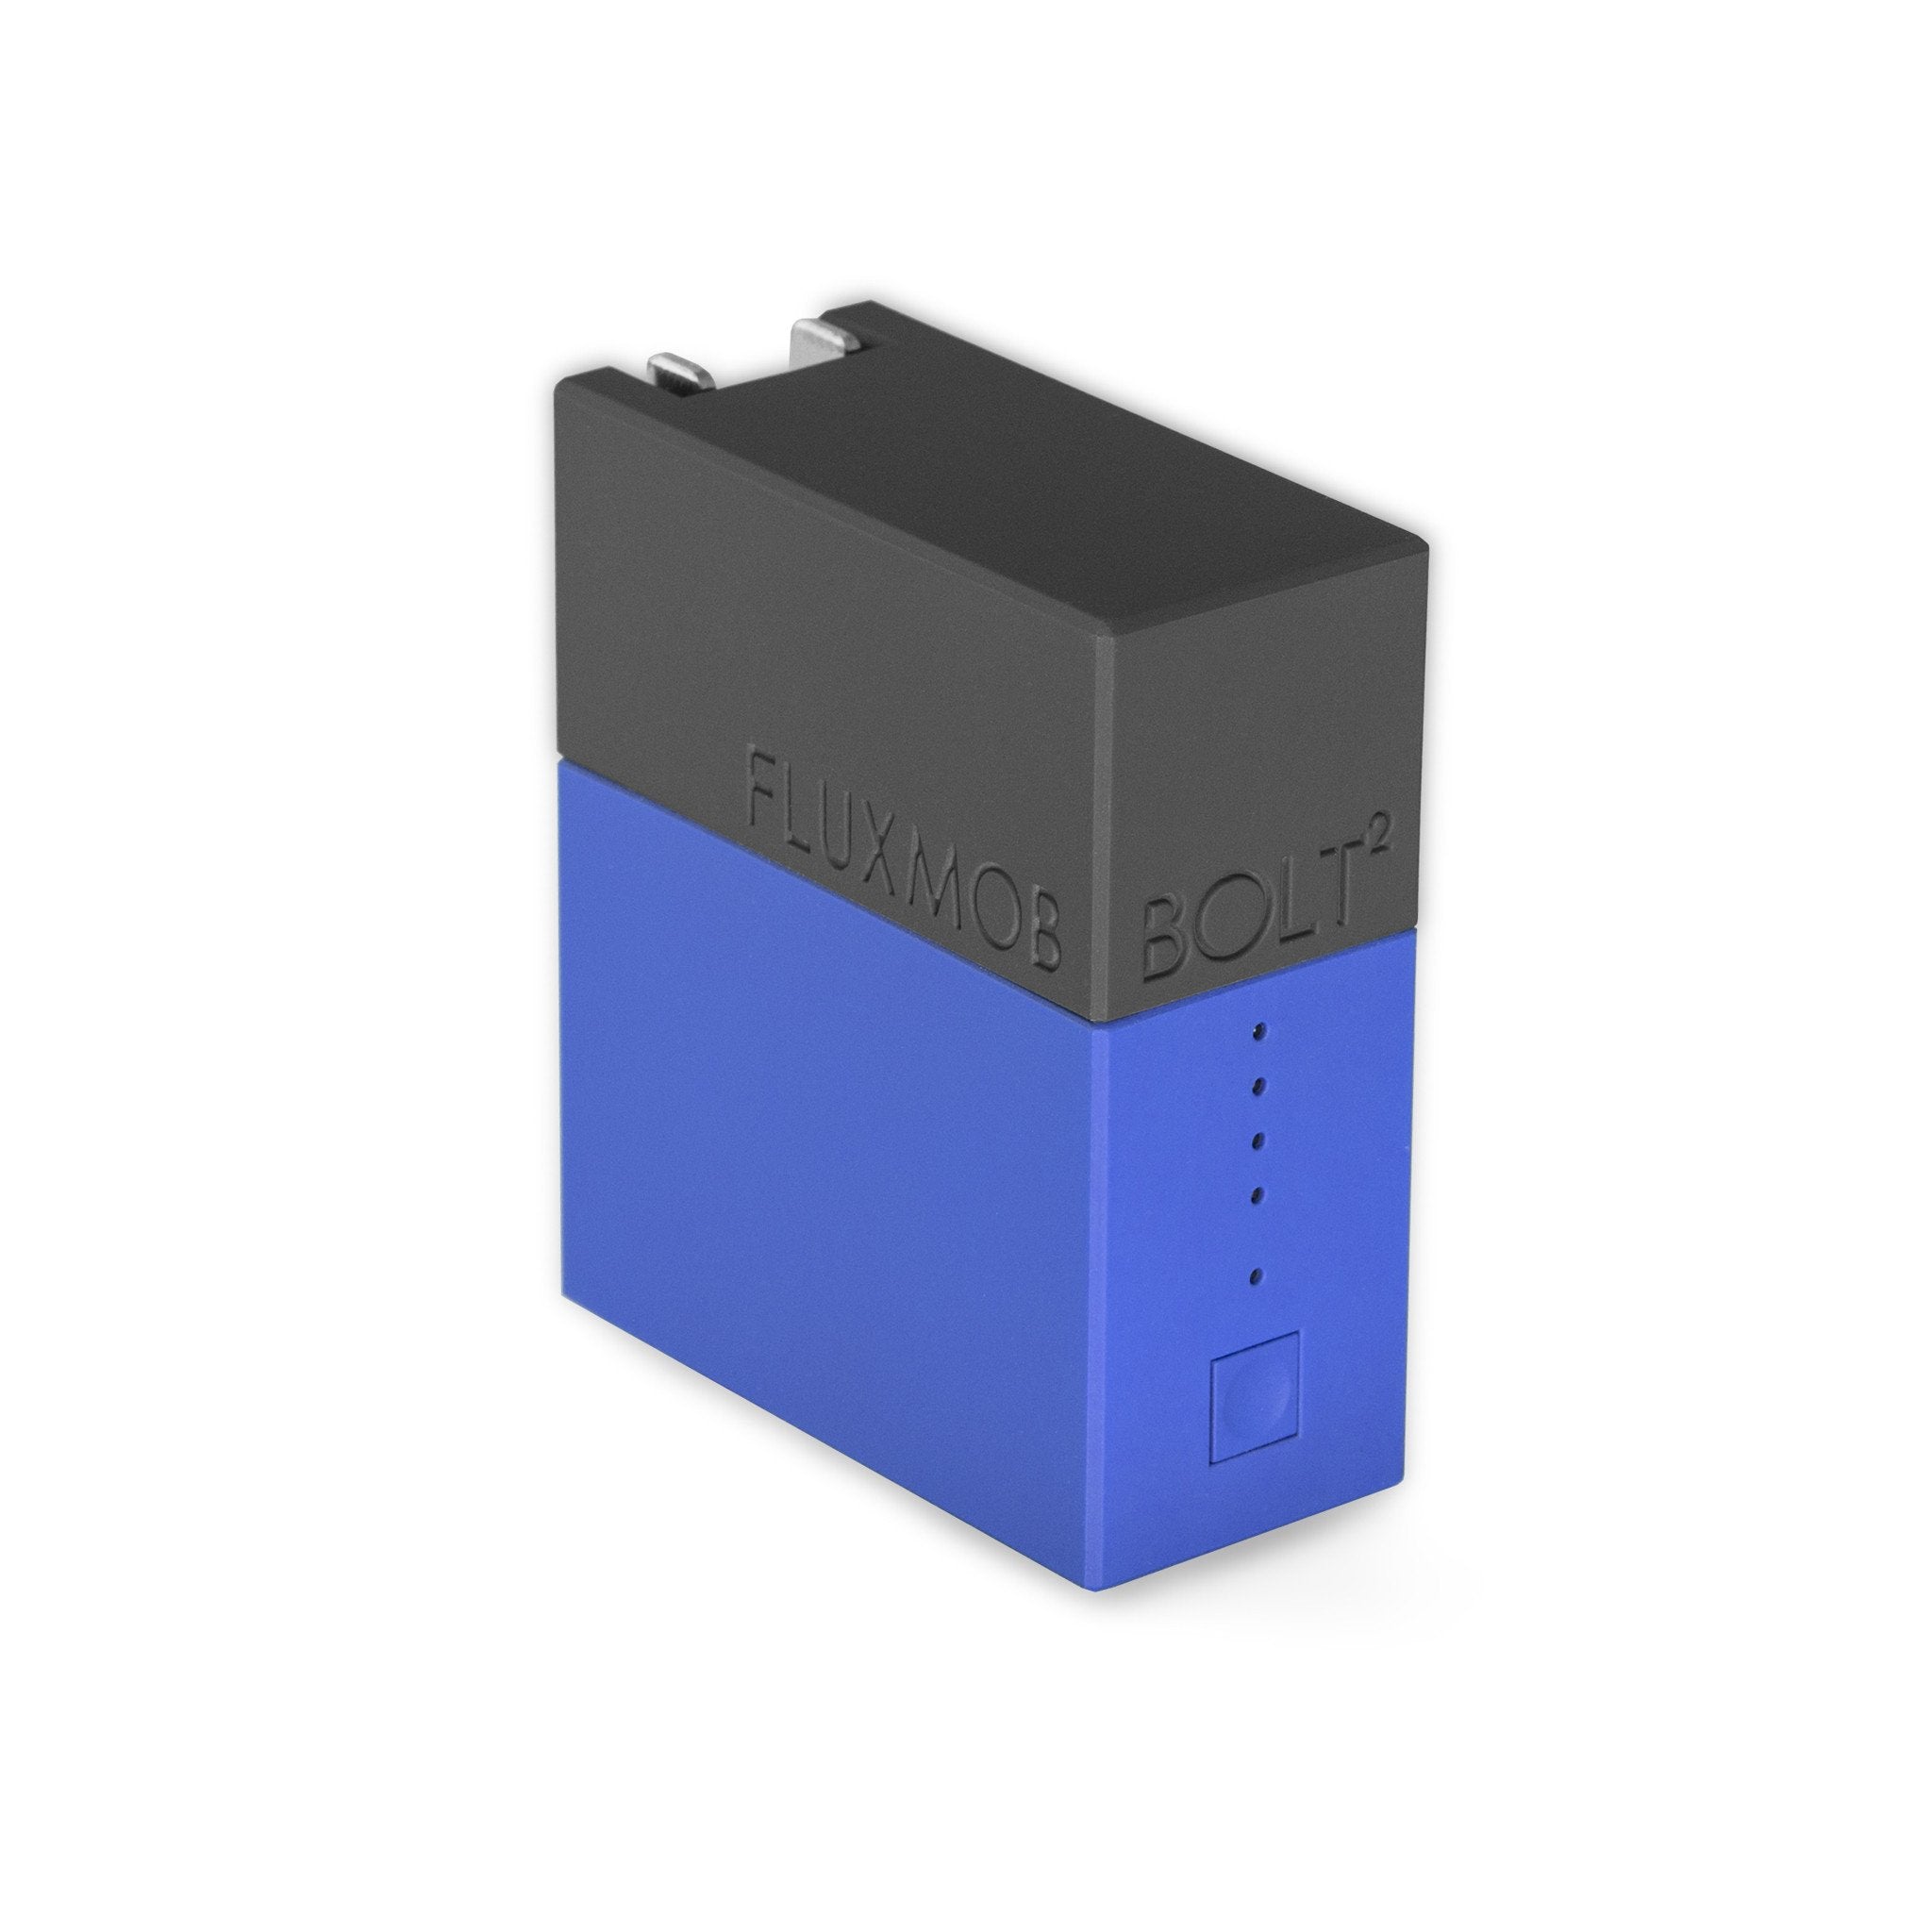 BOLT²: (2) USB Ports, Battery: 6600mAh Lithium Ion